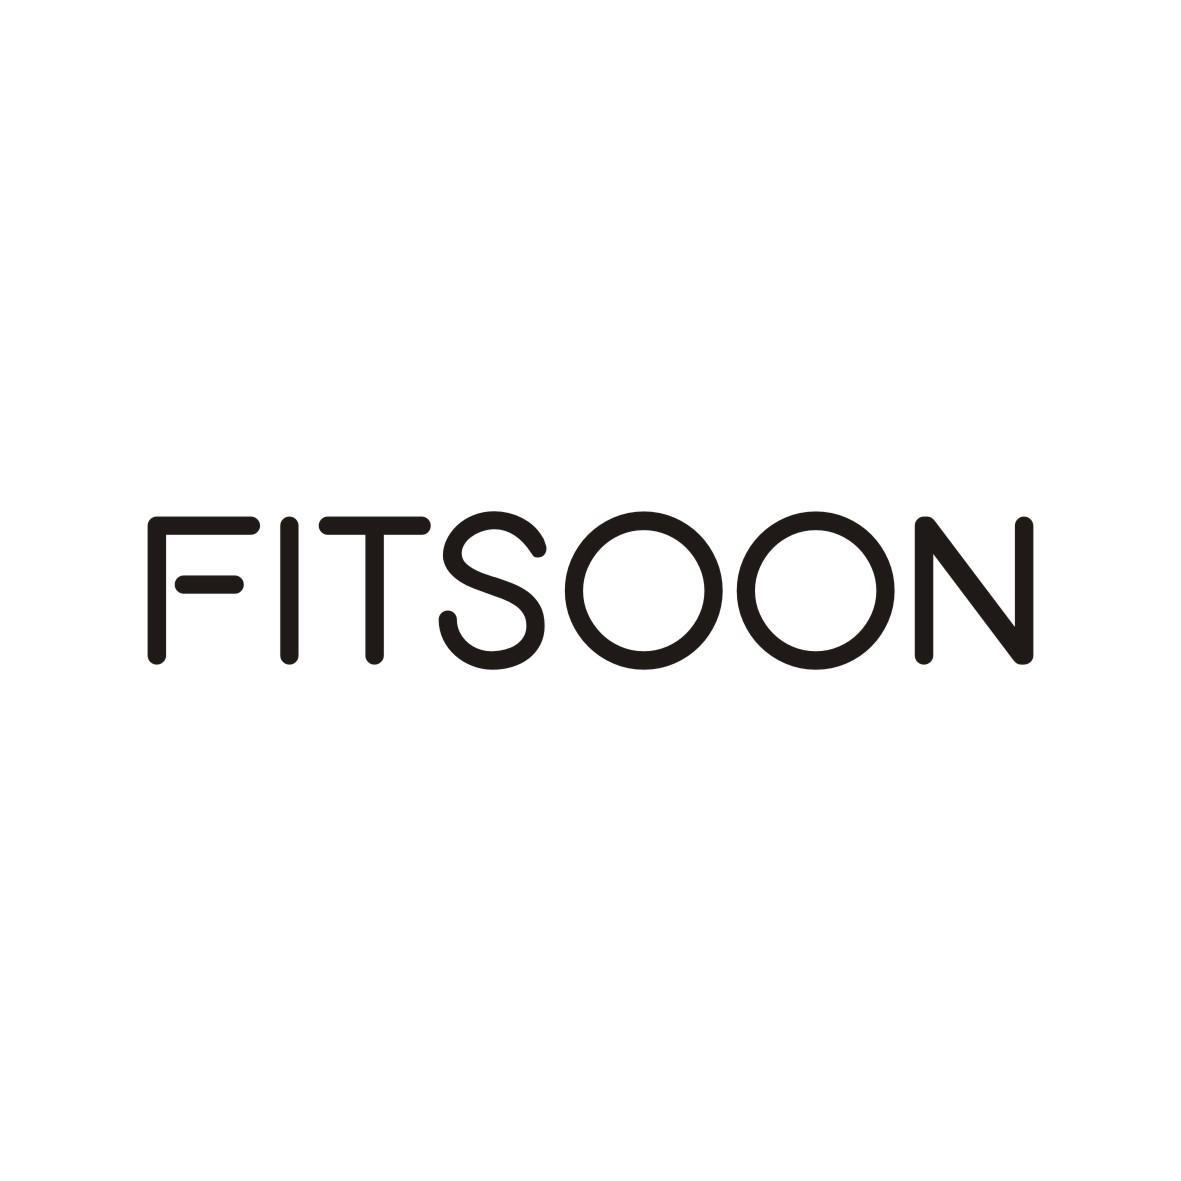 FITSOON商标转让